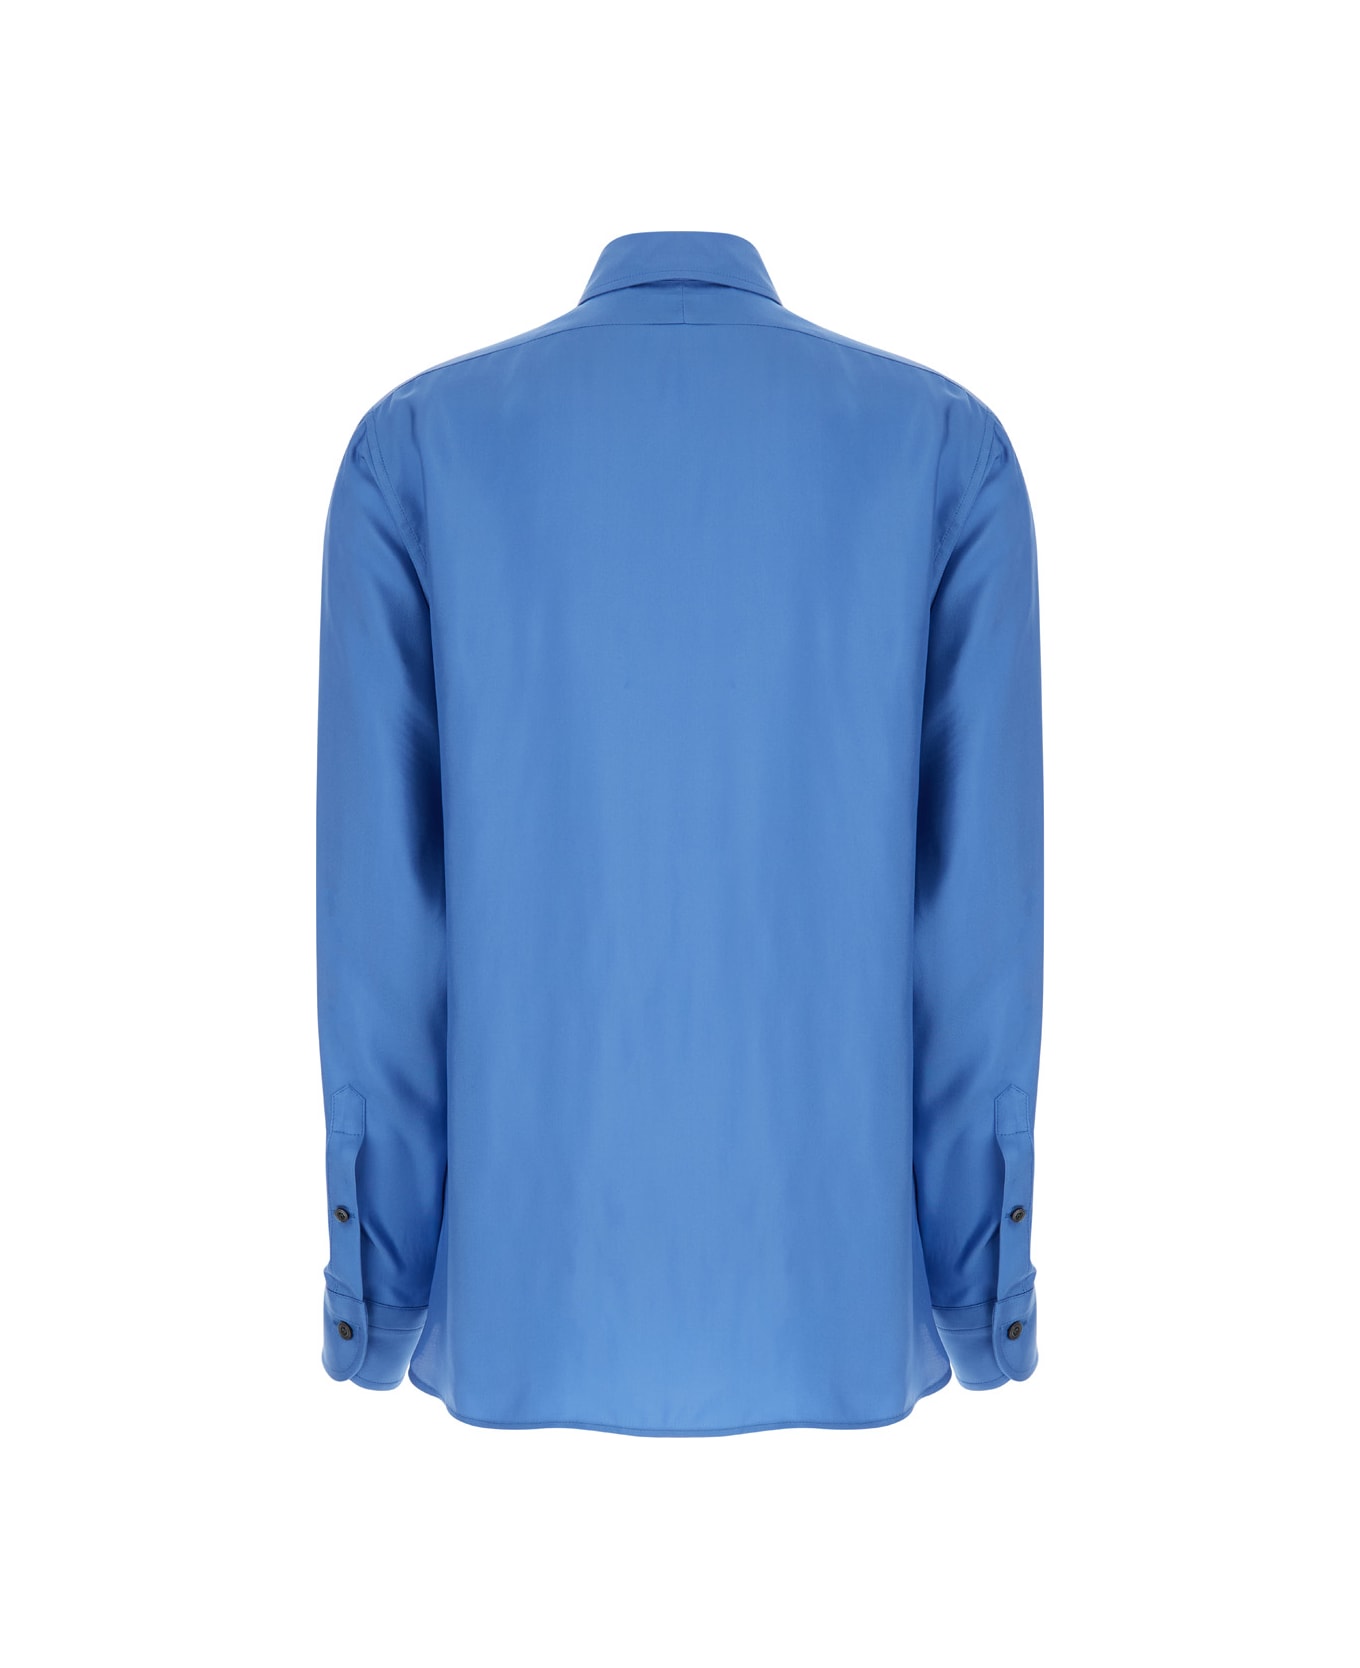 Tom Ford Pleated Plastron Shirt - Blu シャツ